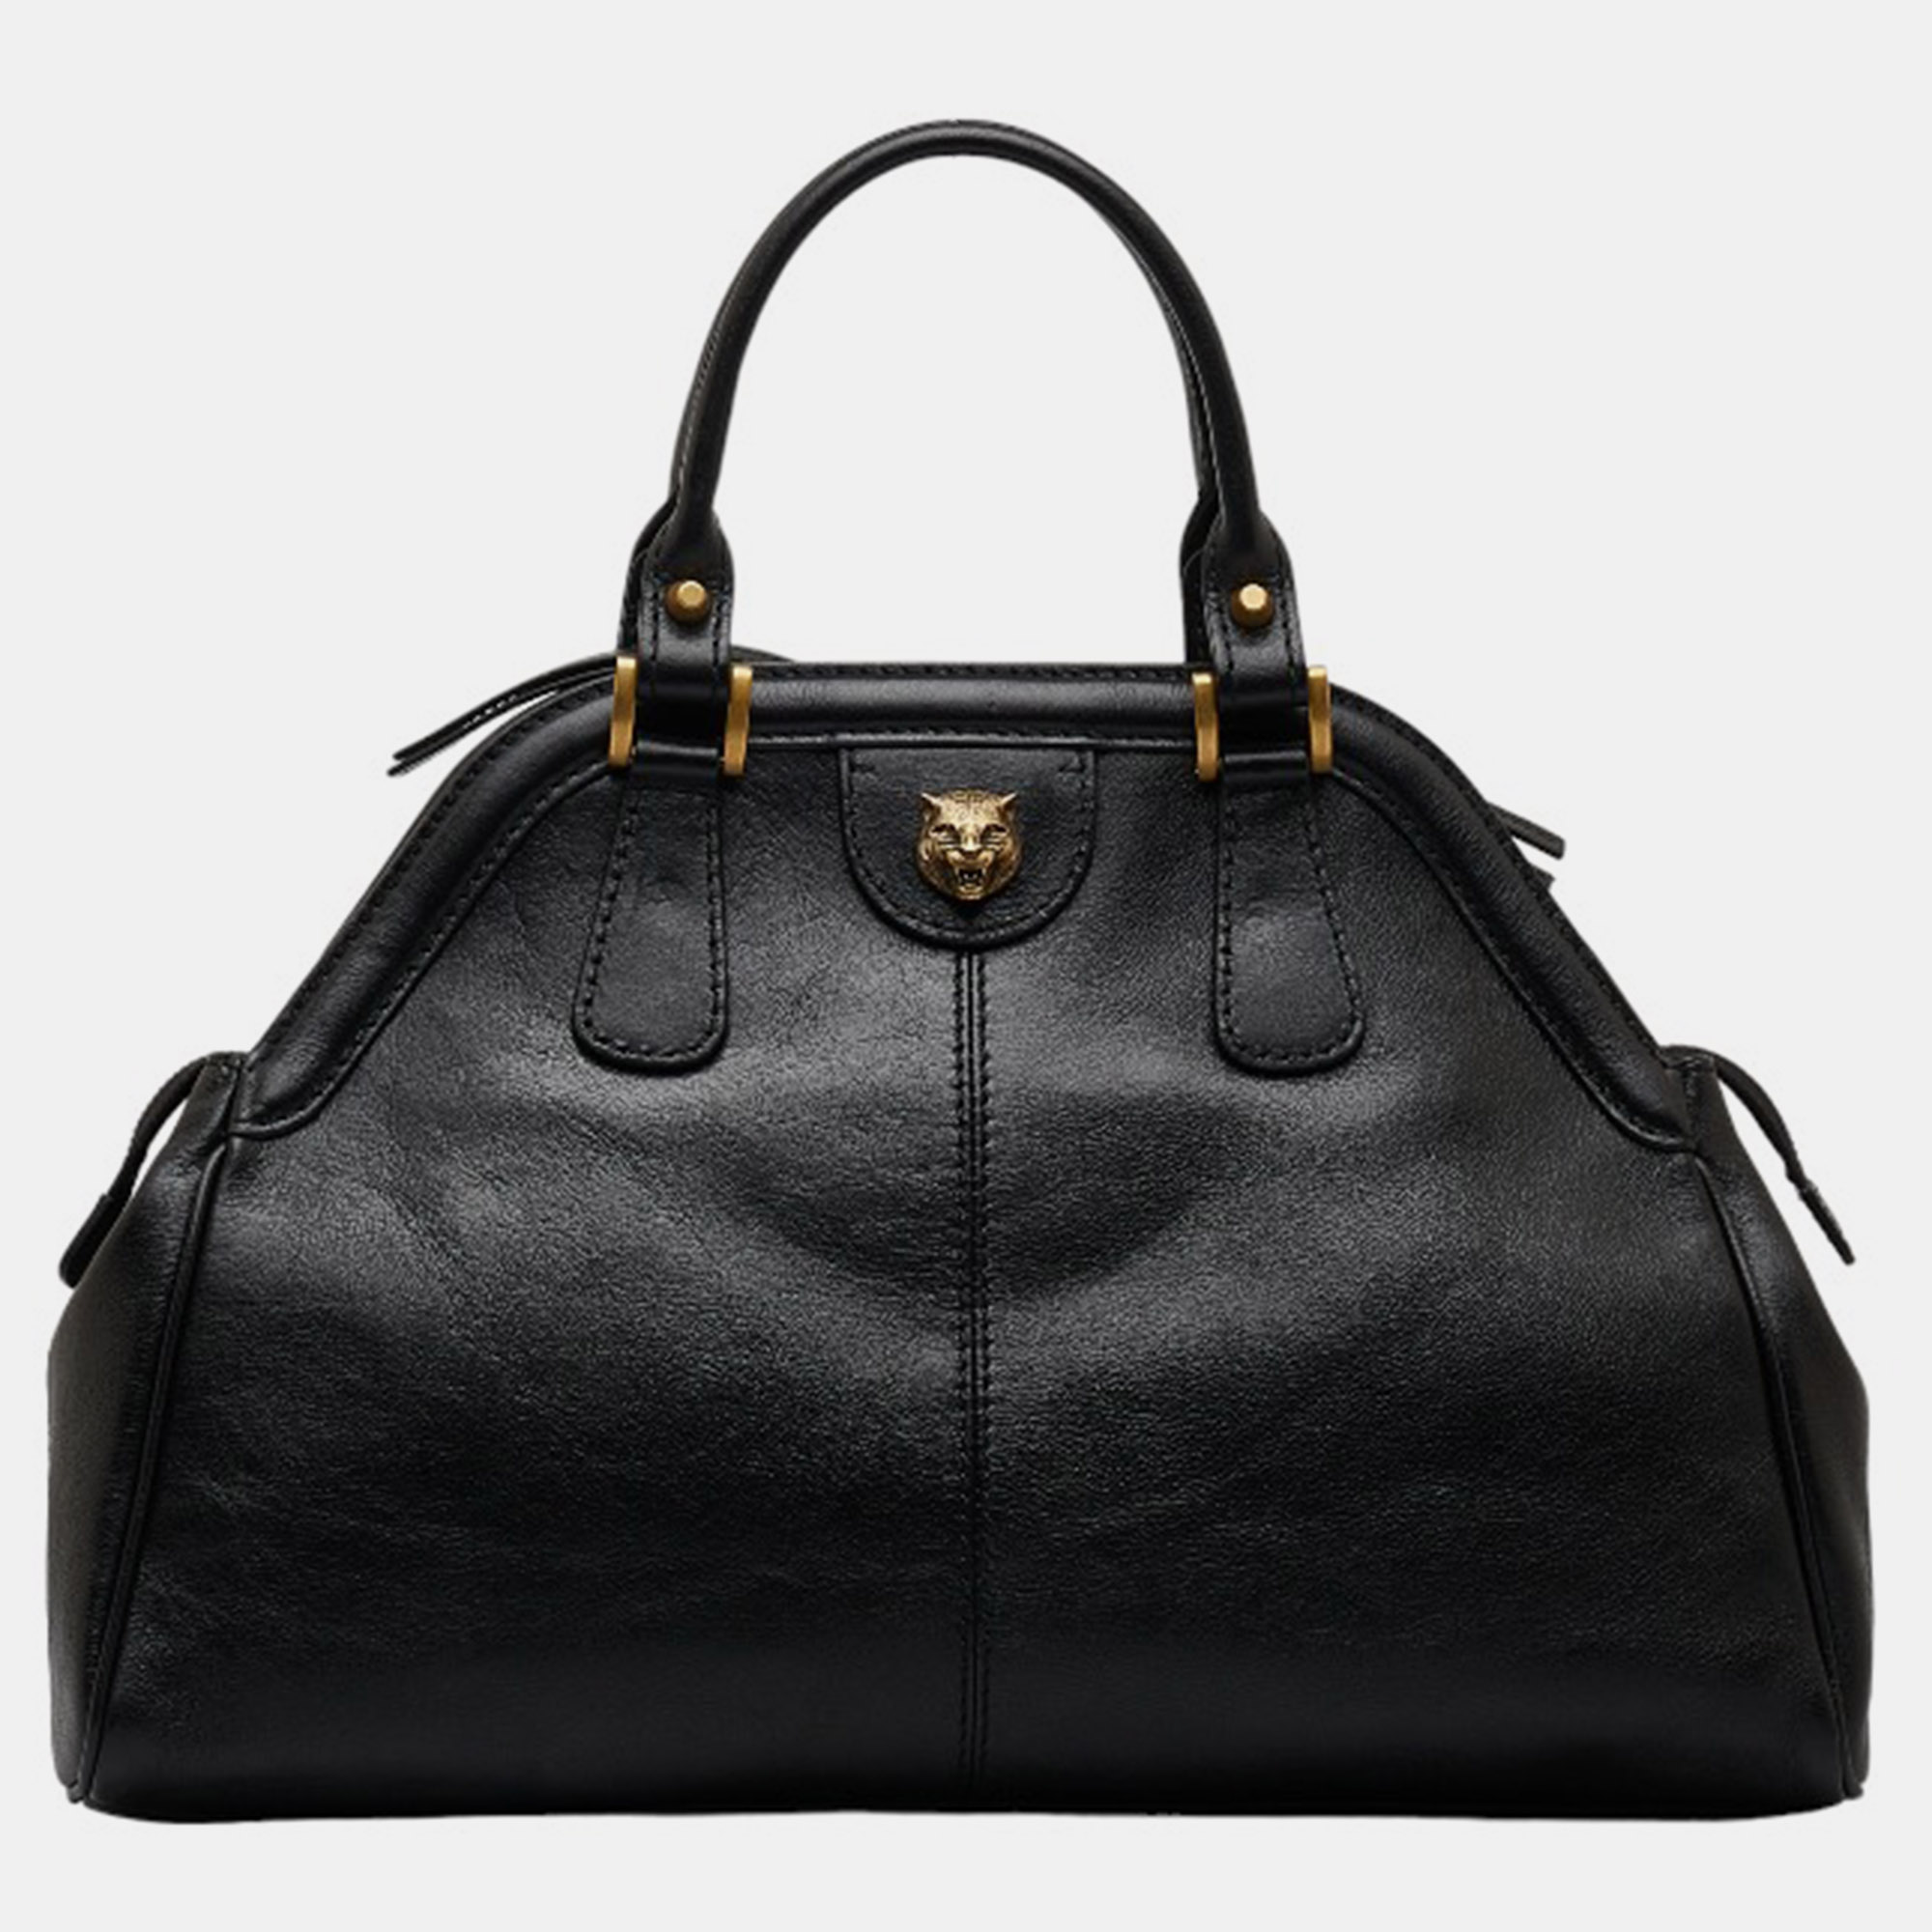 Gucci Black Leather Medium Rebelle Top Handle Bag